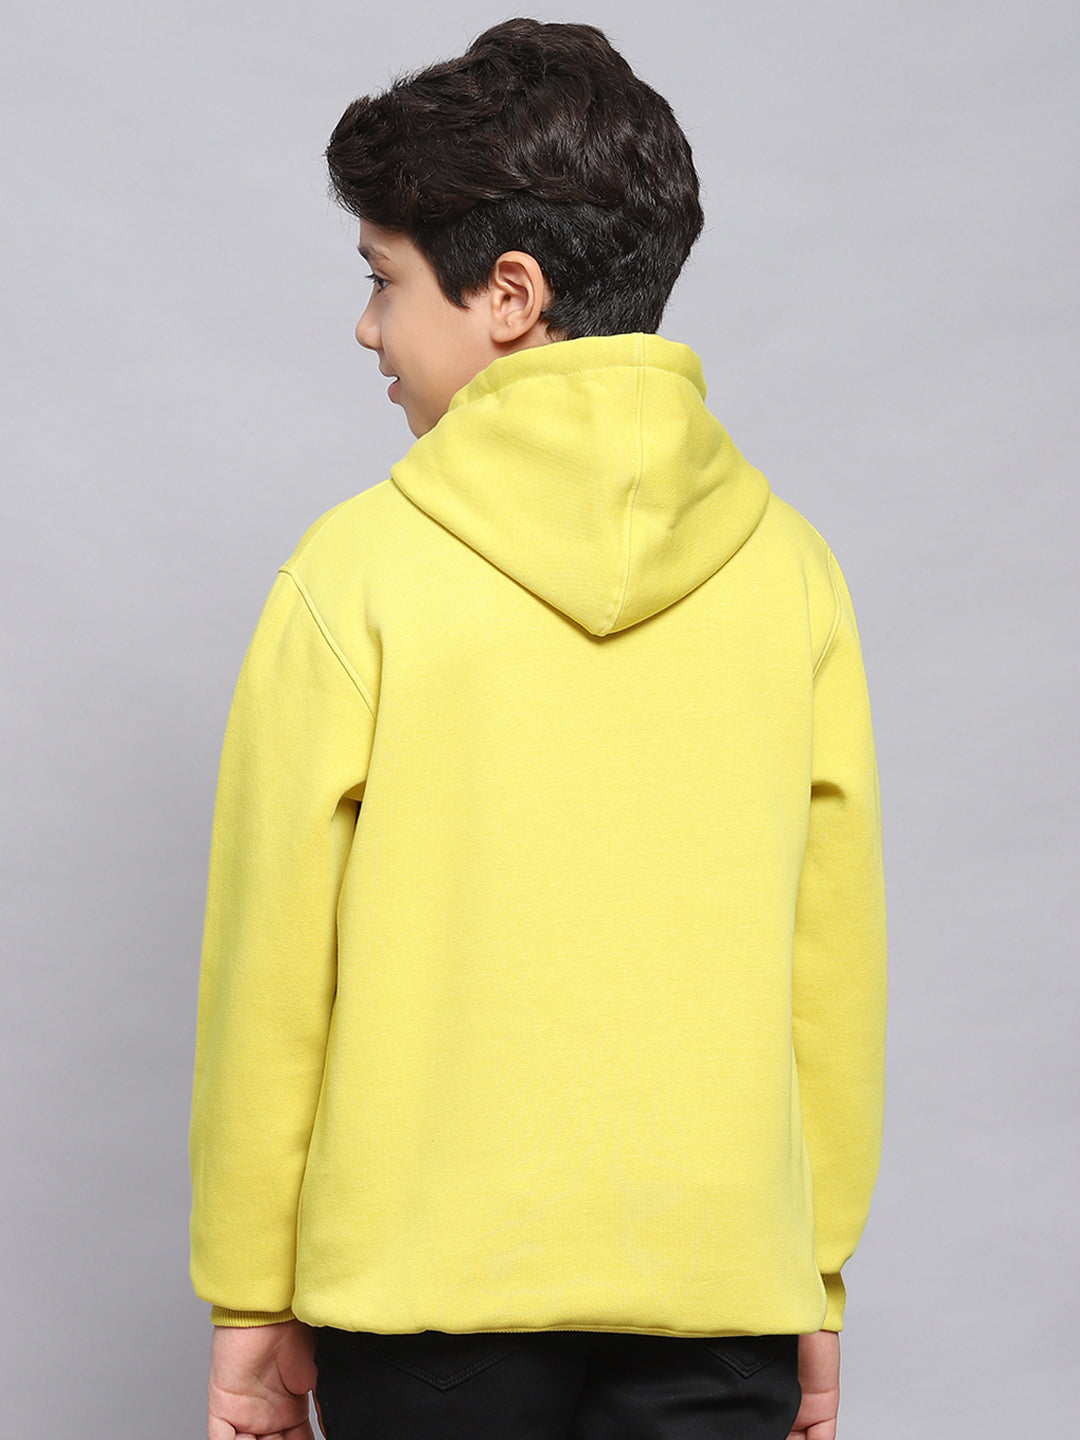 Boys Yellow Printed Hooded Full Sleeve Sweatshirt